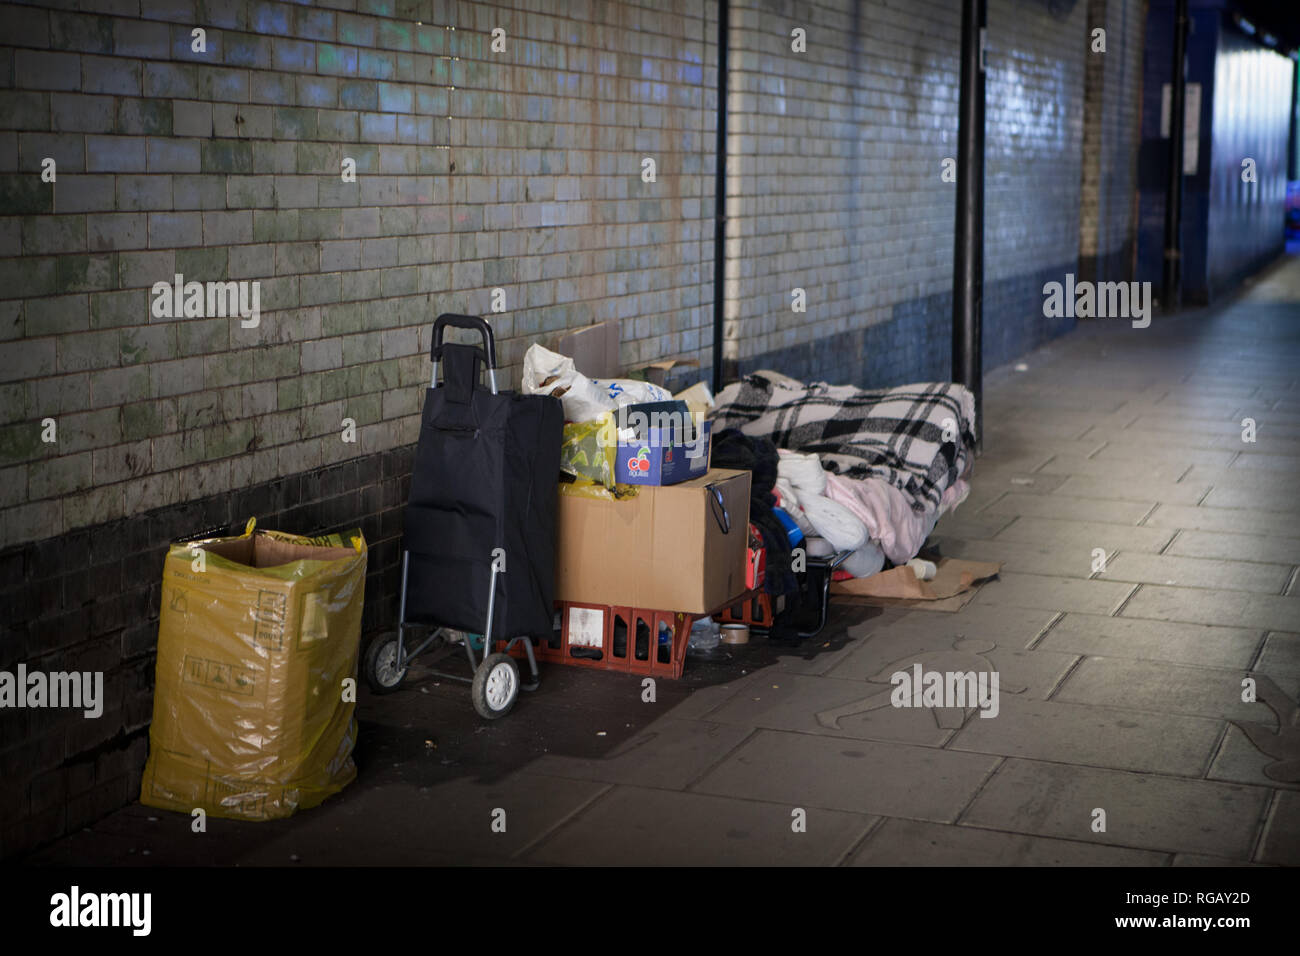 Homeless belongings in Finsbury Park, London Stock Photo